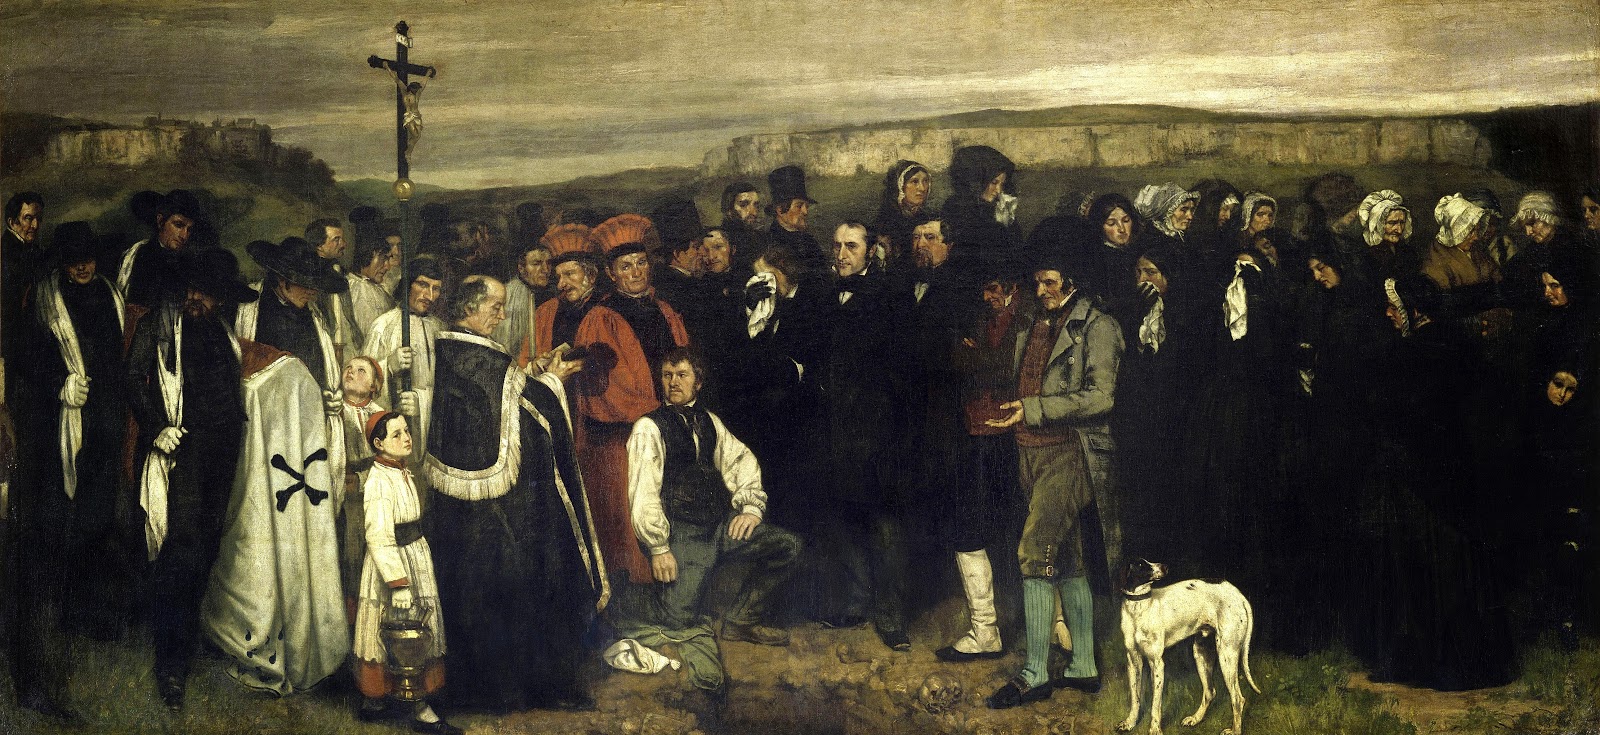 Gustave+Courbet-1819-1877 (82).jpg